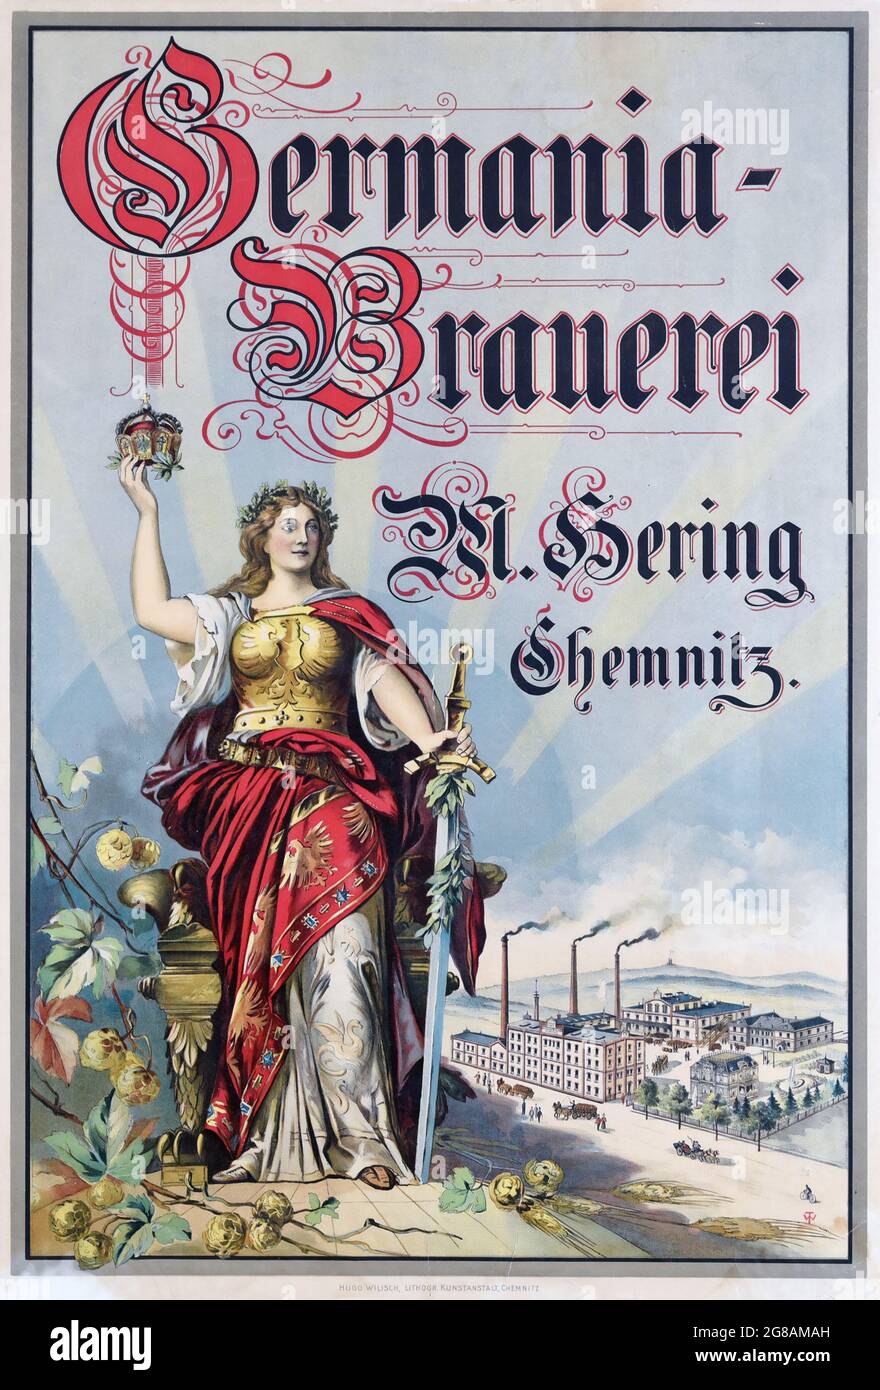 Vintage advertisement for beer. Germania Brauerei – Beer Ad 1900 Vintage Drink Poster (Alcohol bar wine mixed beer liquor) Chemnitz Stock Photo